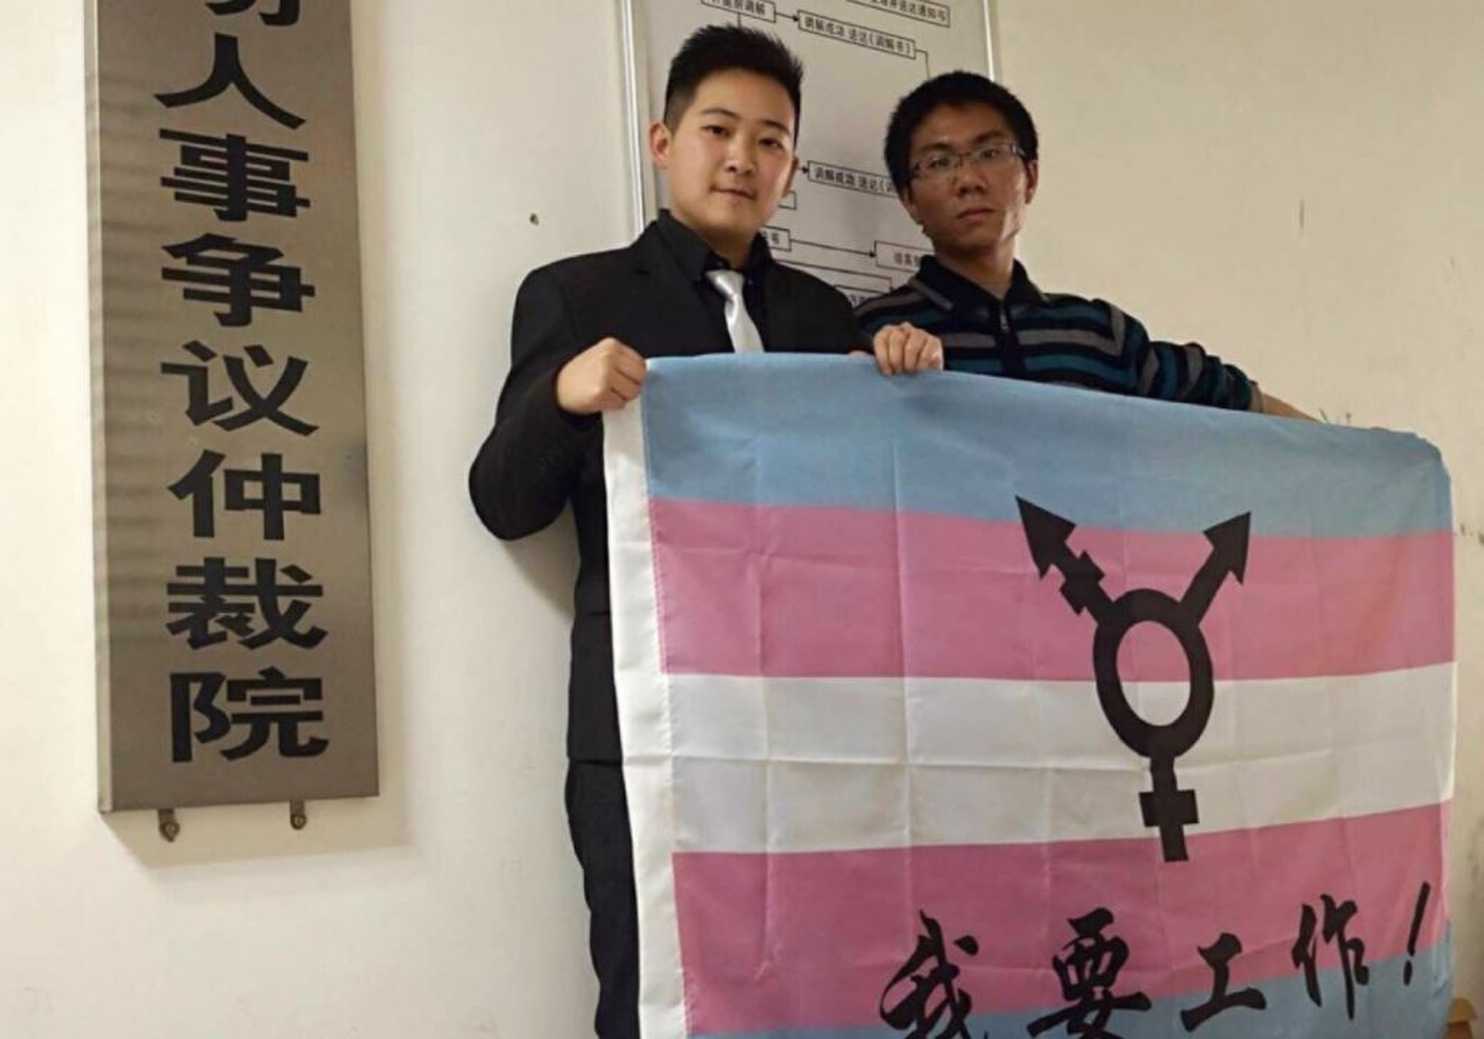 transgender man in China